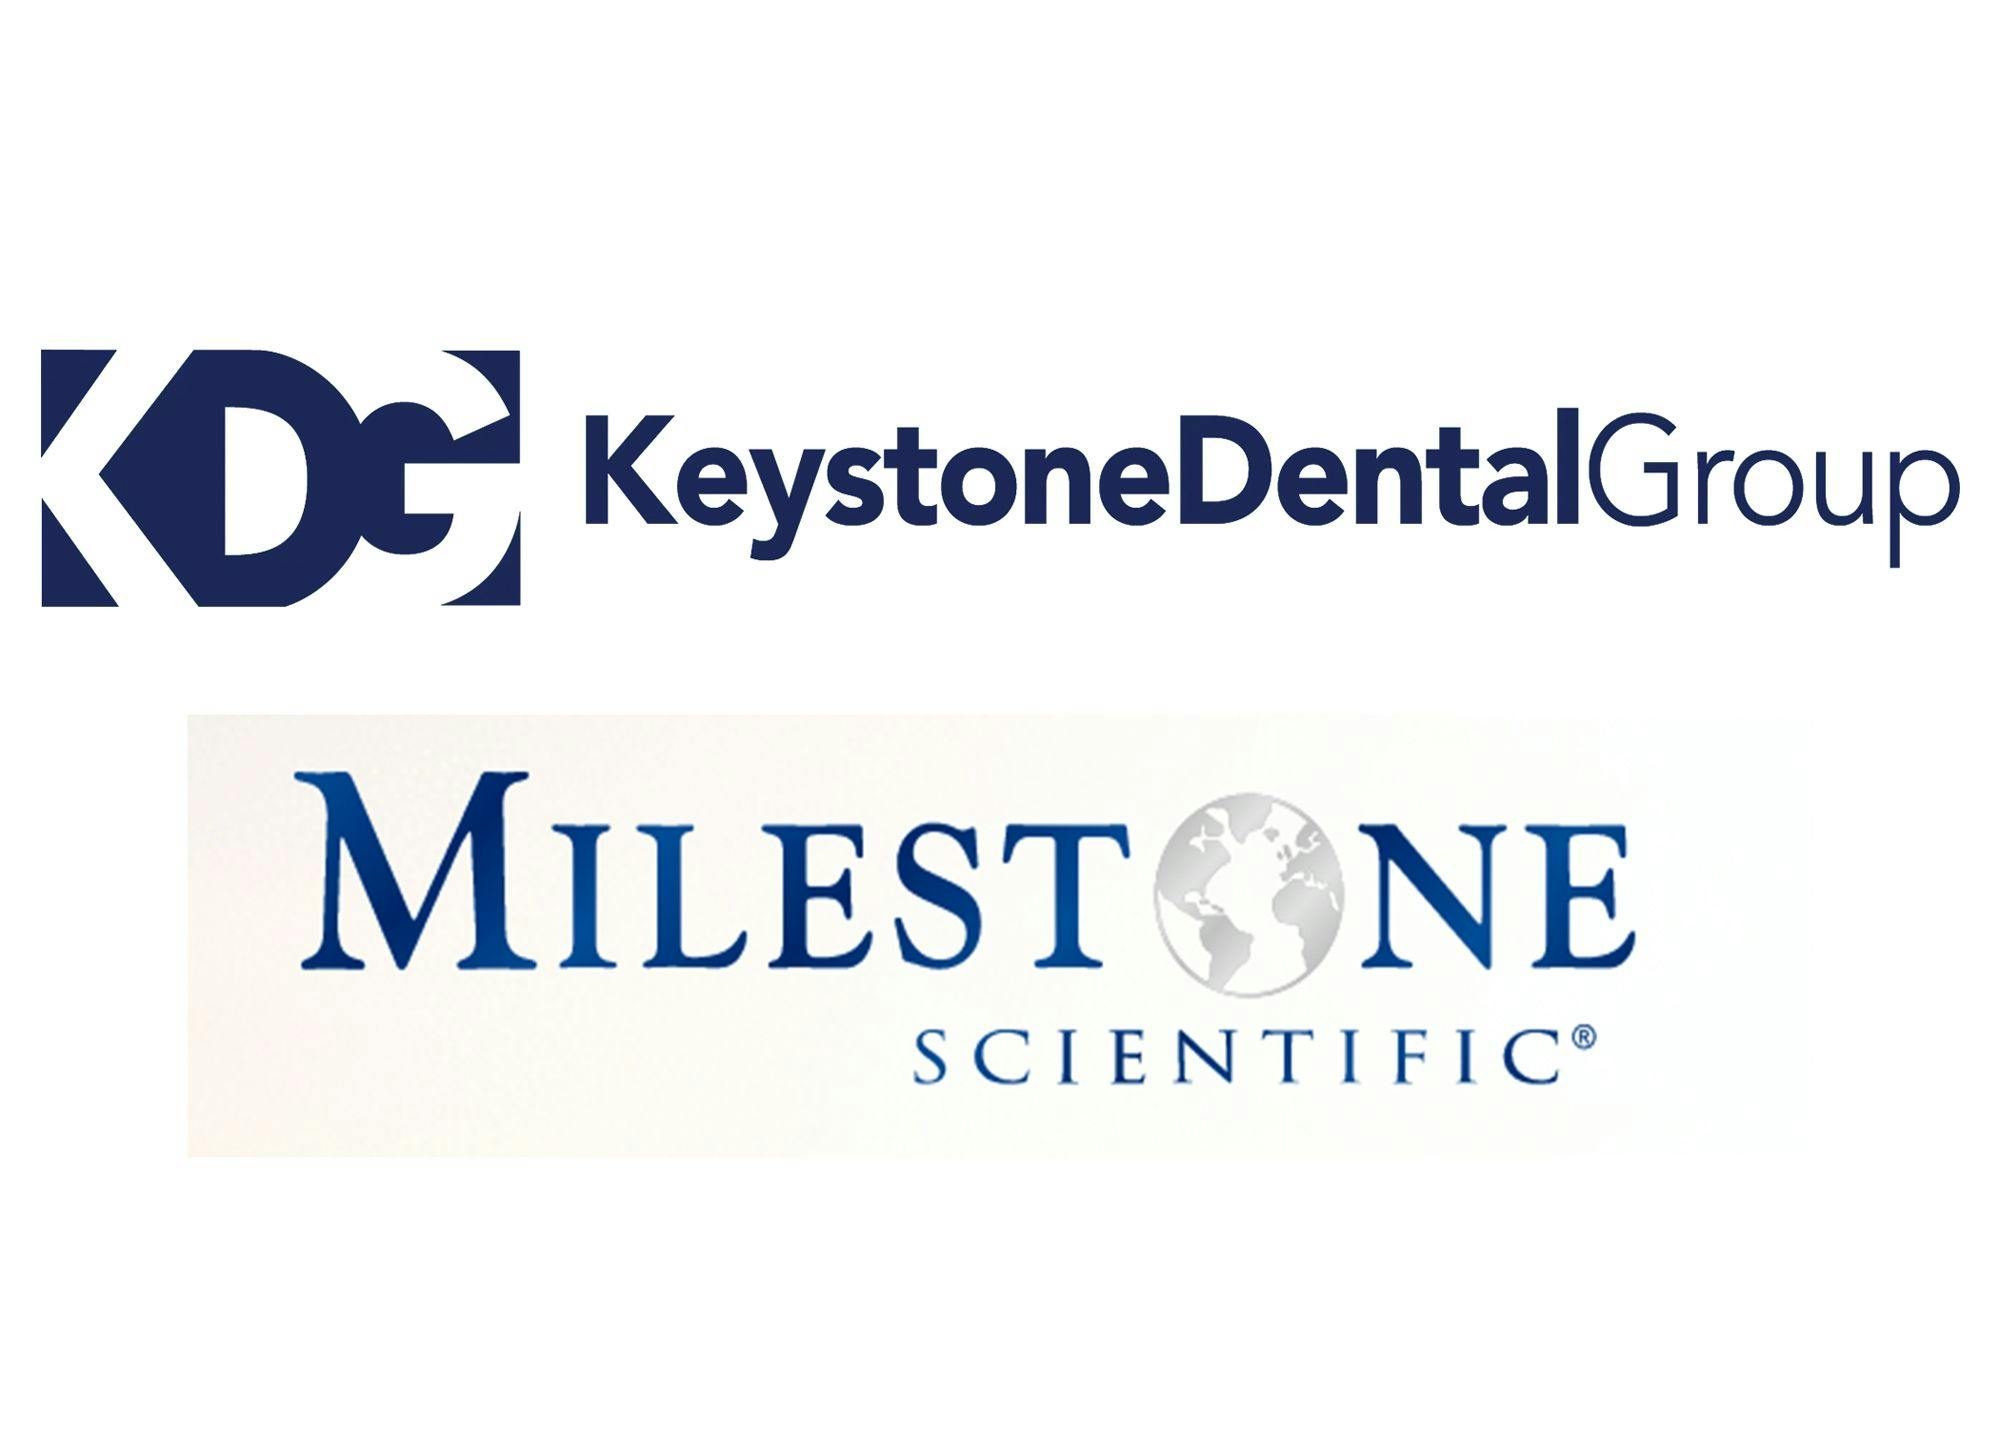 Keystone Dental Announces Partnership with Milestone Scientific